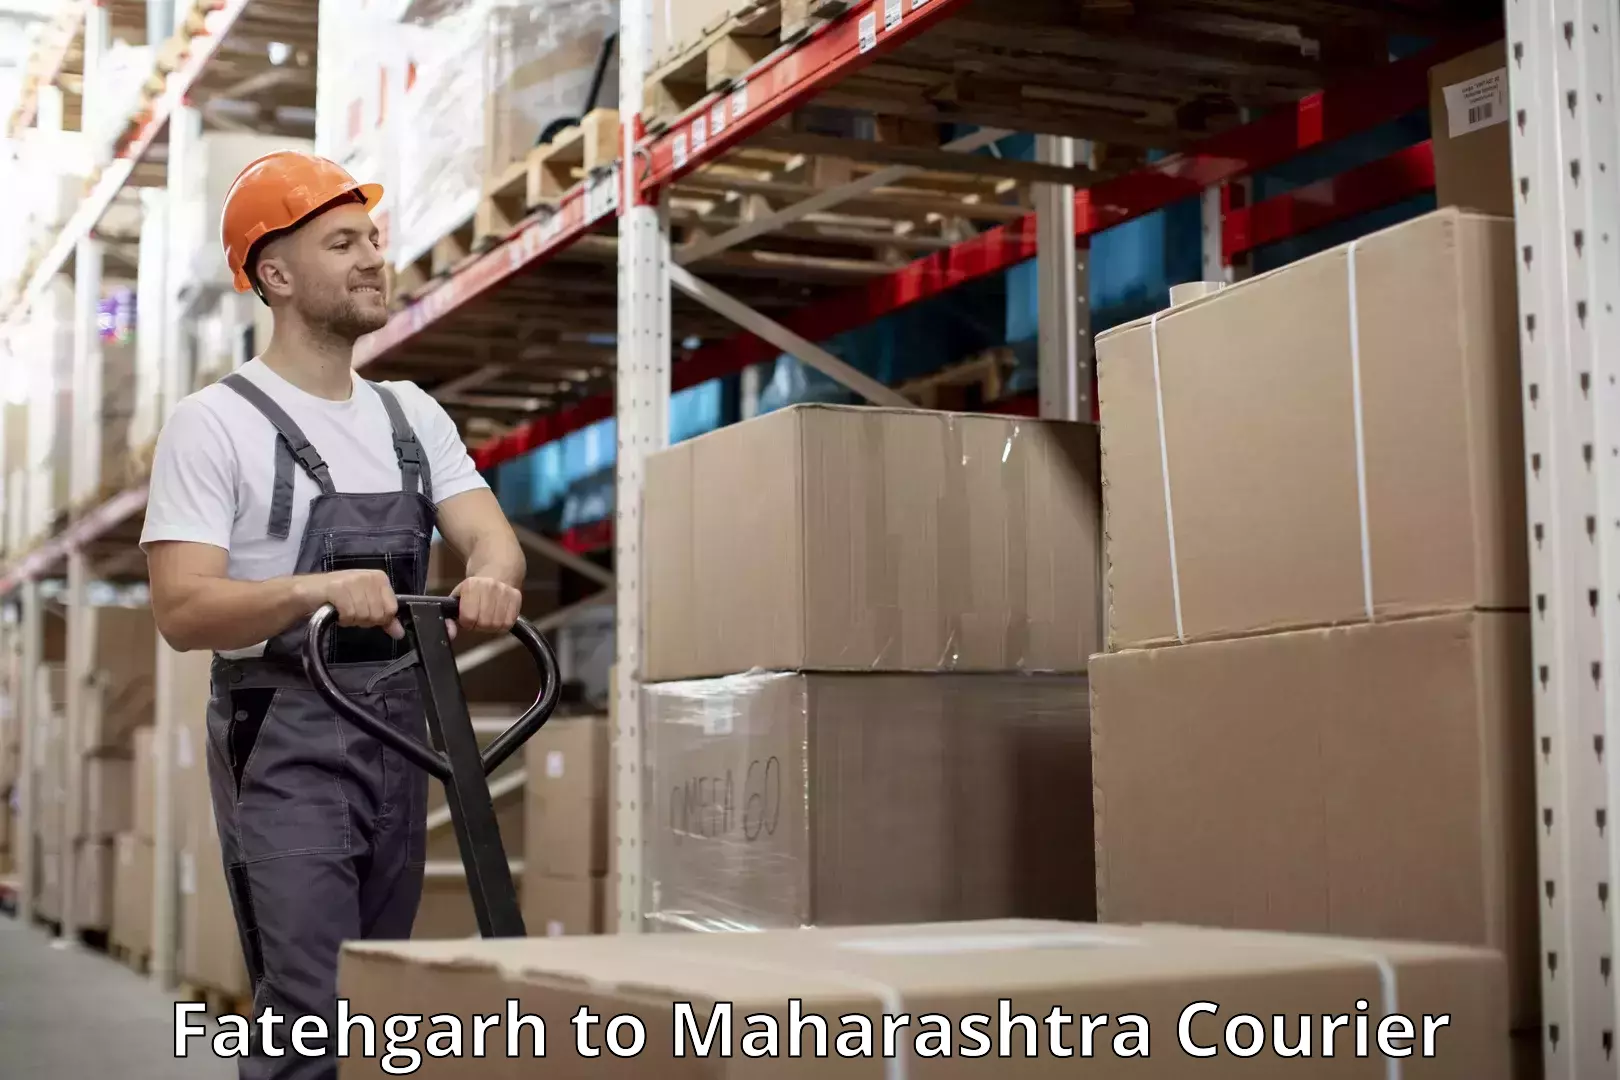 Luggage shipment processing in Fatehgarh to Maharashtra